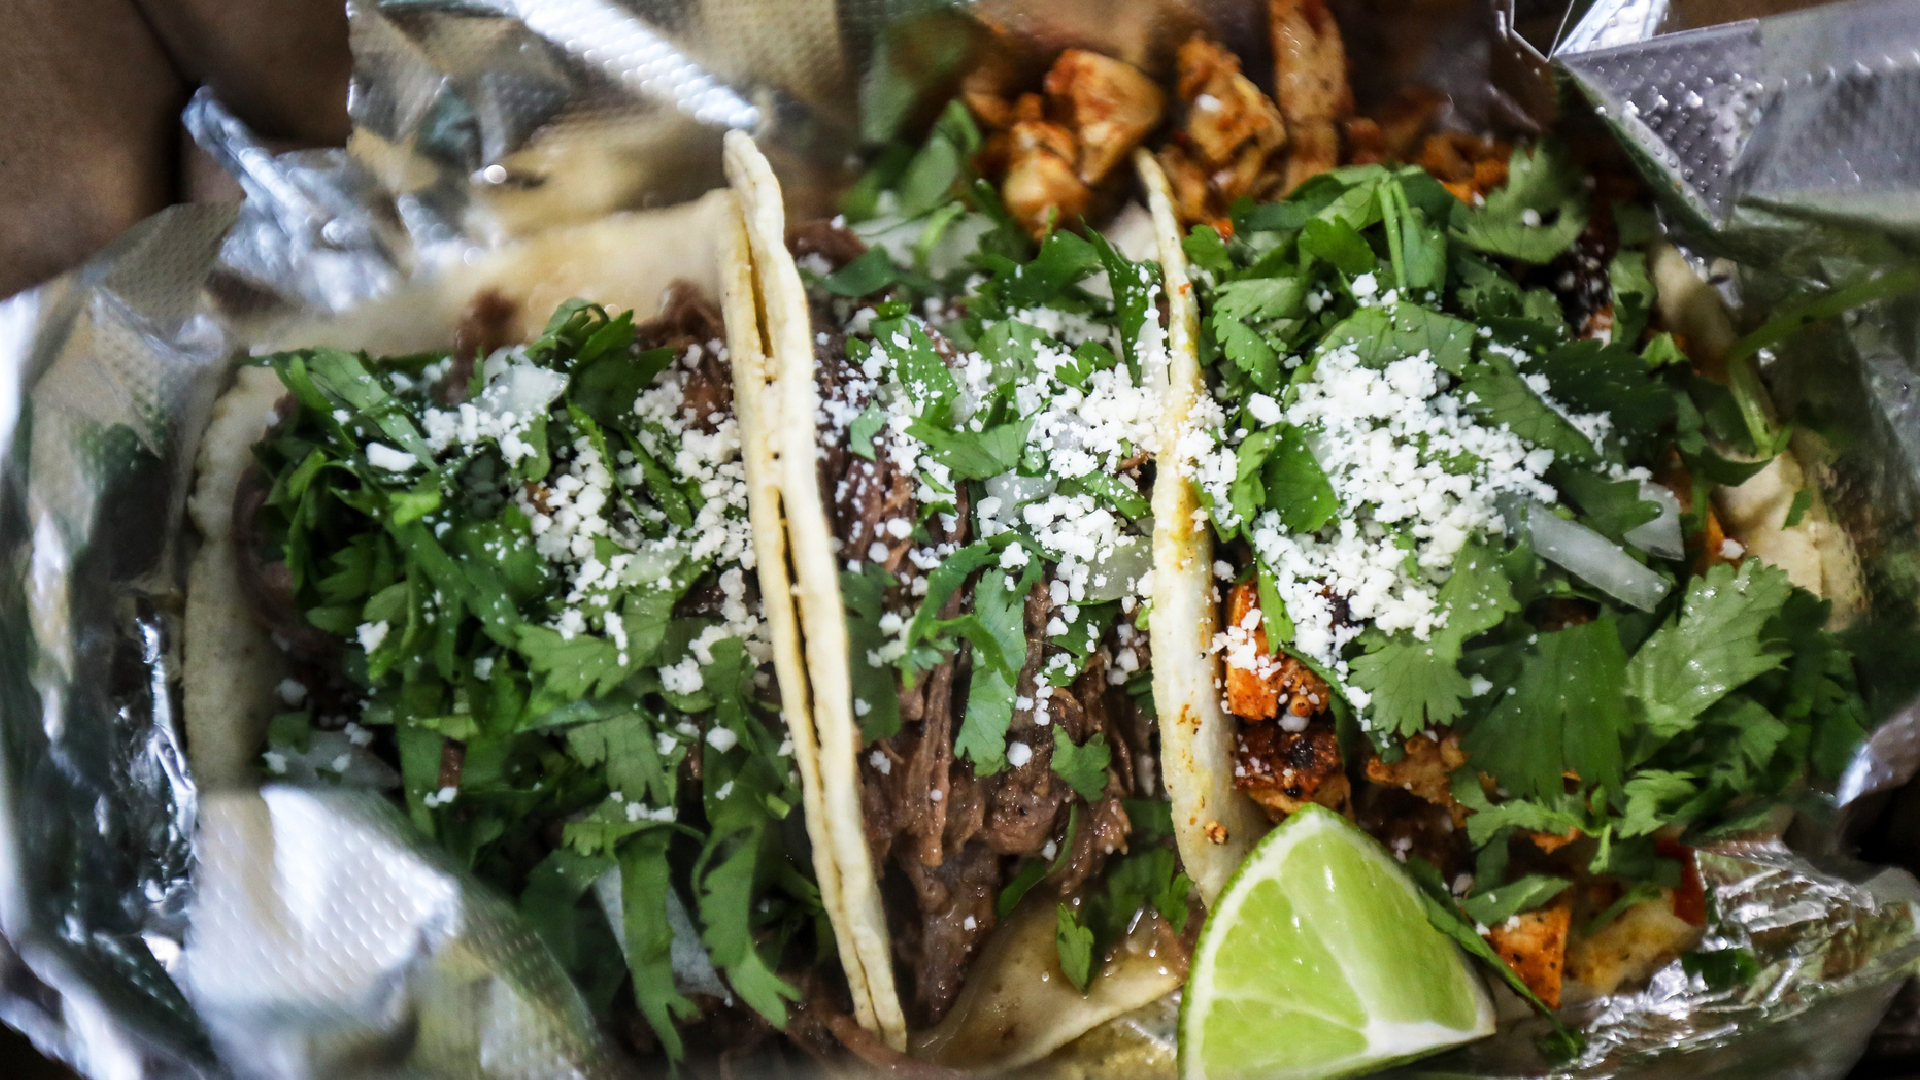 Freep Top 10 - Tacos Hernandez Food Truck